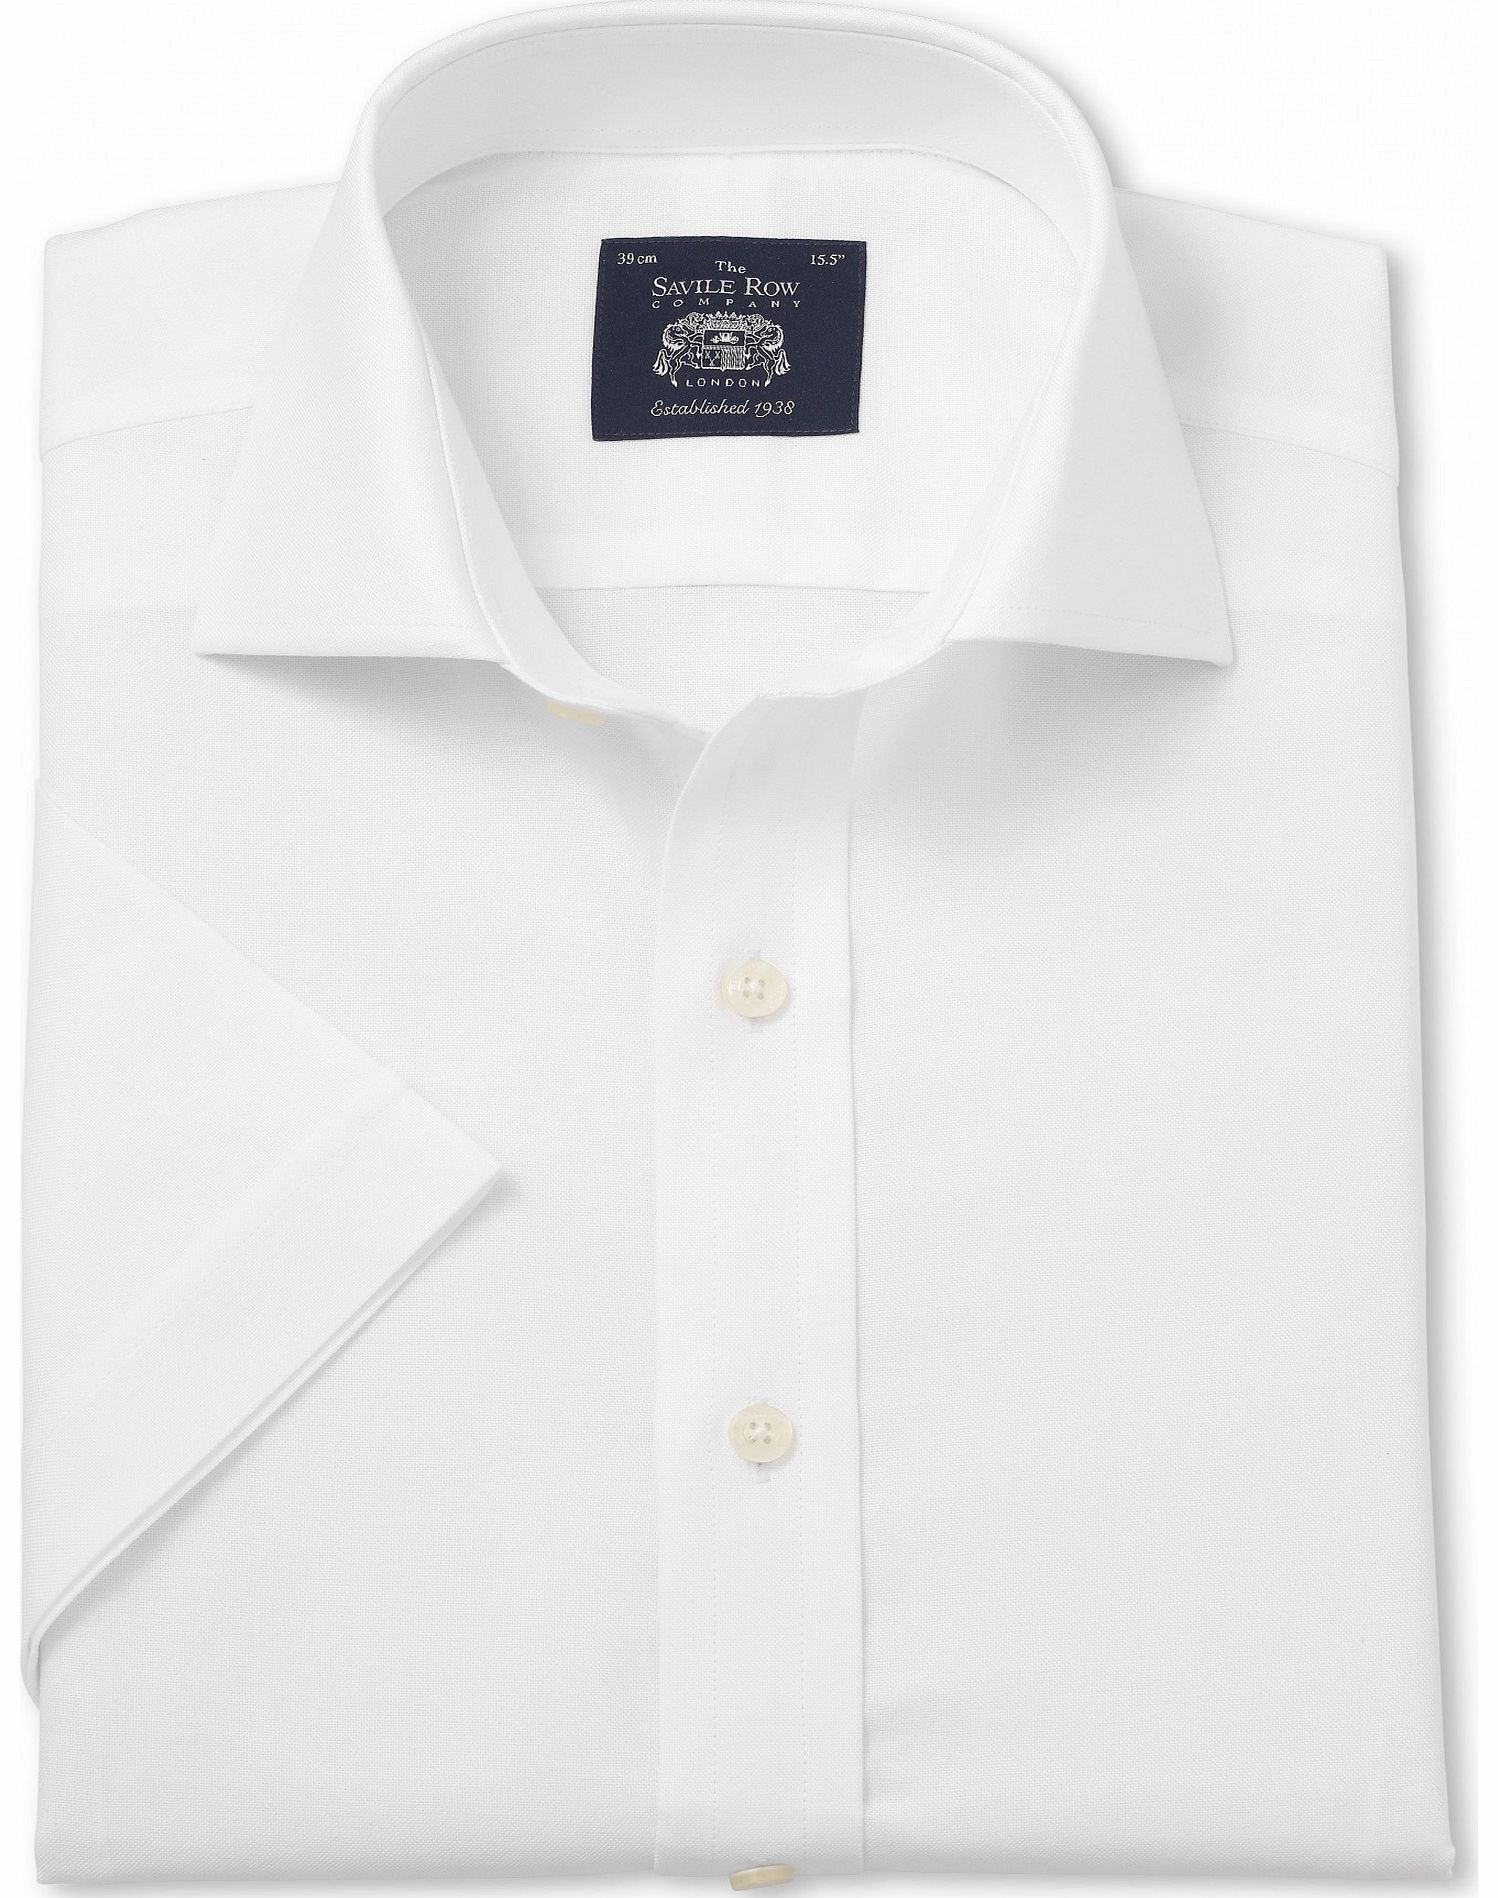 Savile Row Company White Pinpoint Short Sleeve Slim Fit Shirt 18``